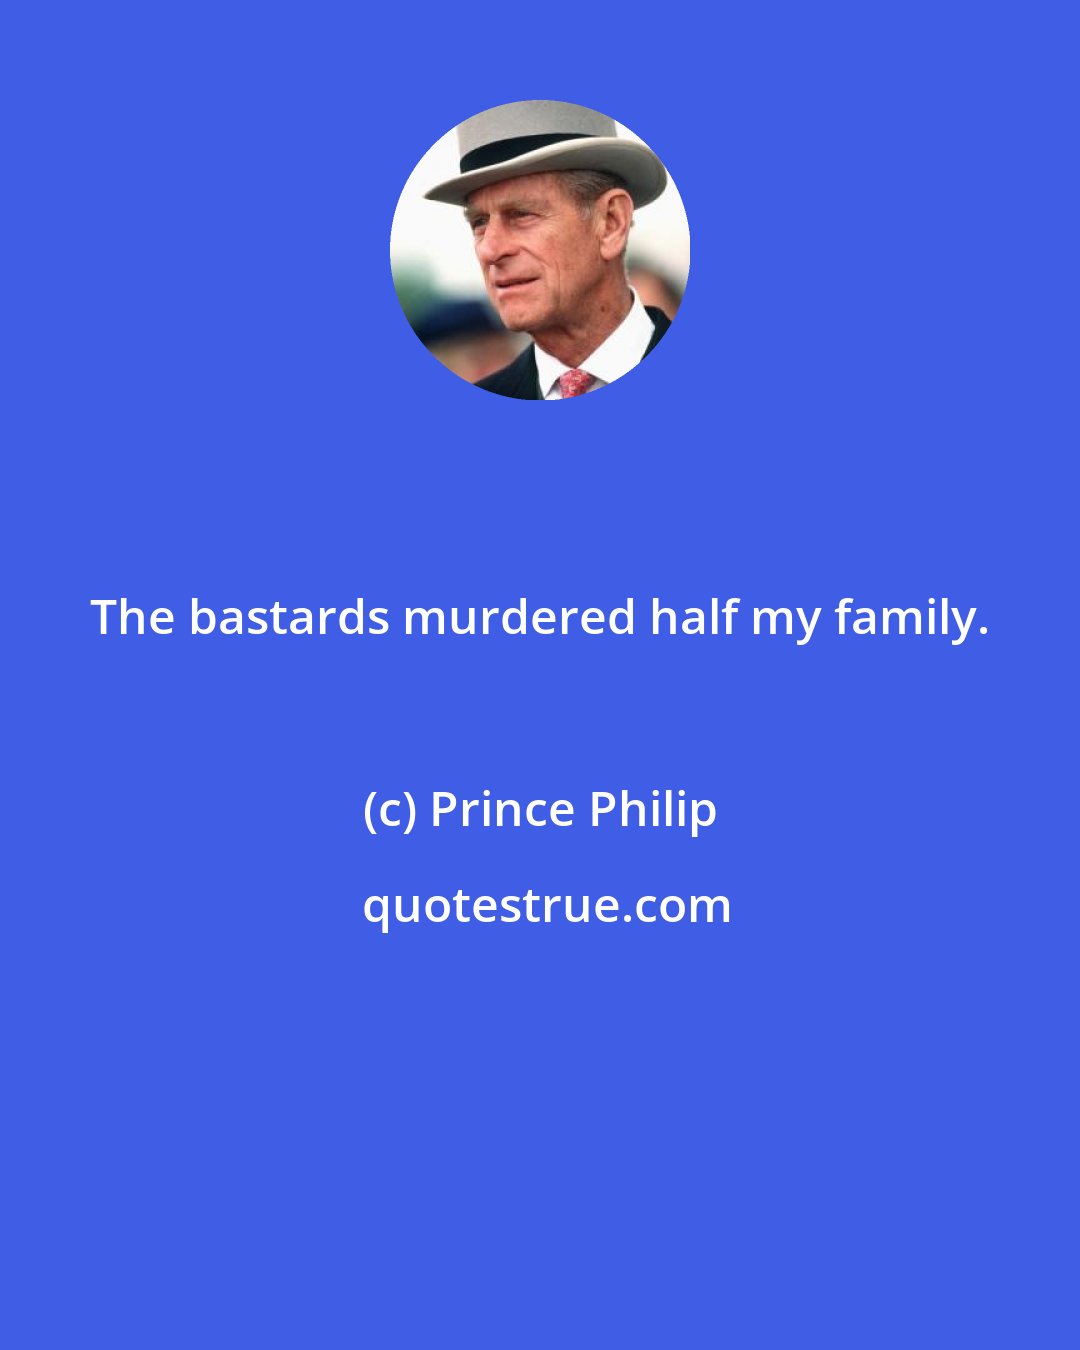 Prince Philip: The bastards murdered half my family.